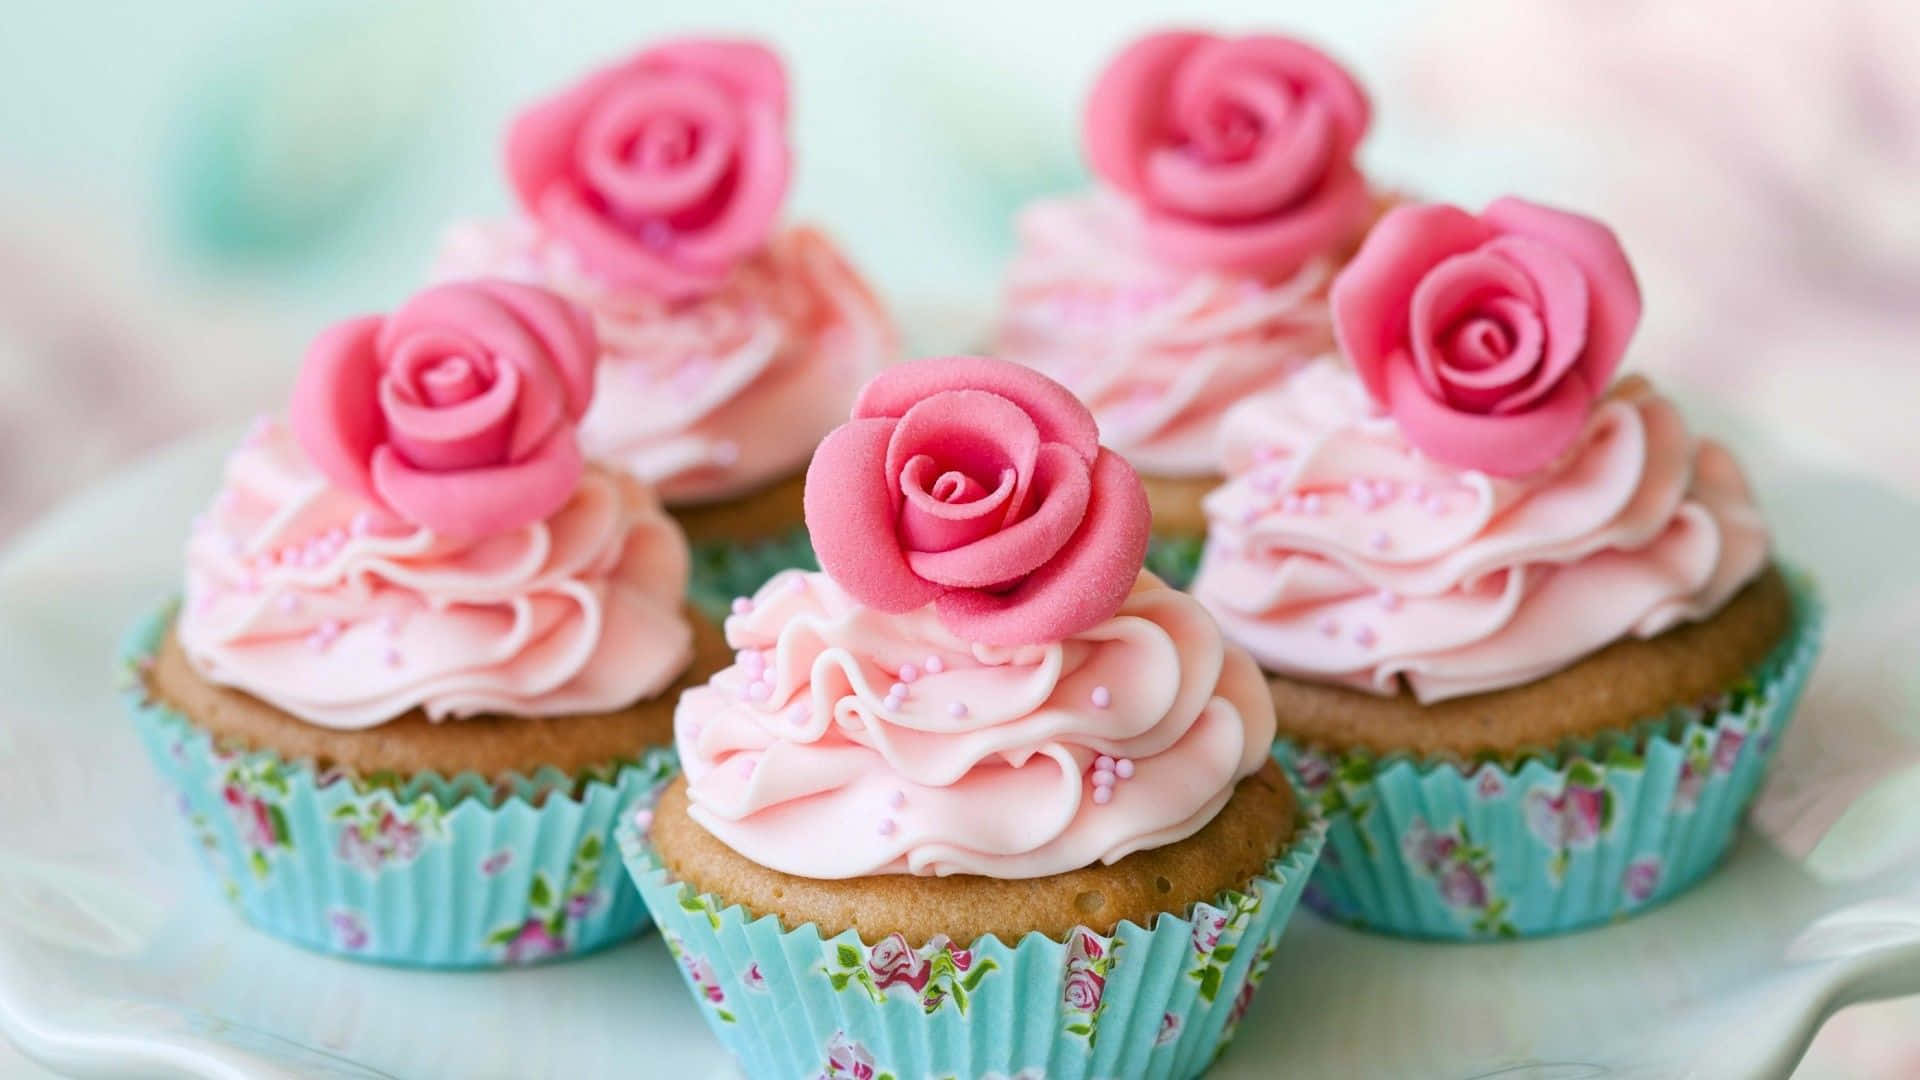 Entallerken Med Cupcakes Pyntet Med Pink Roser.